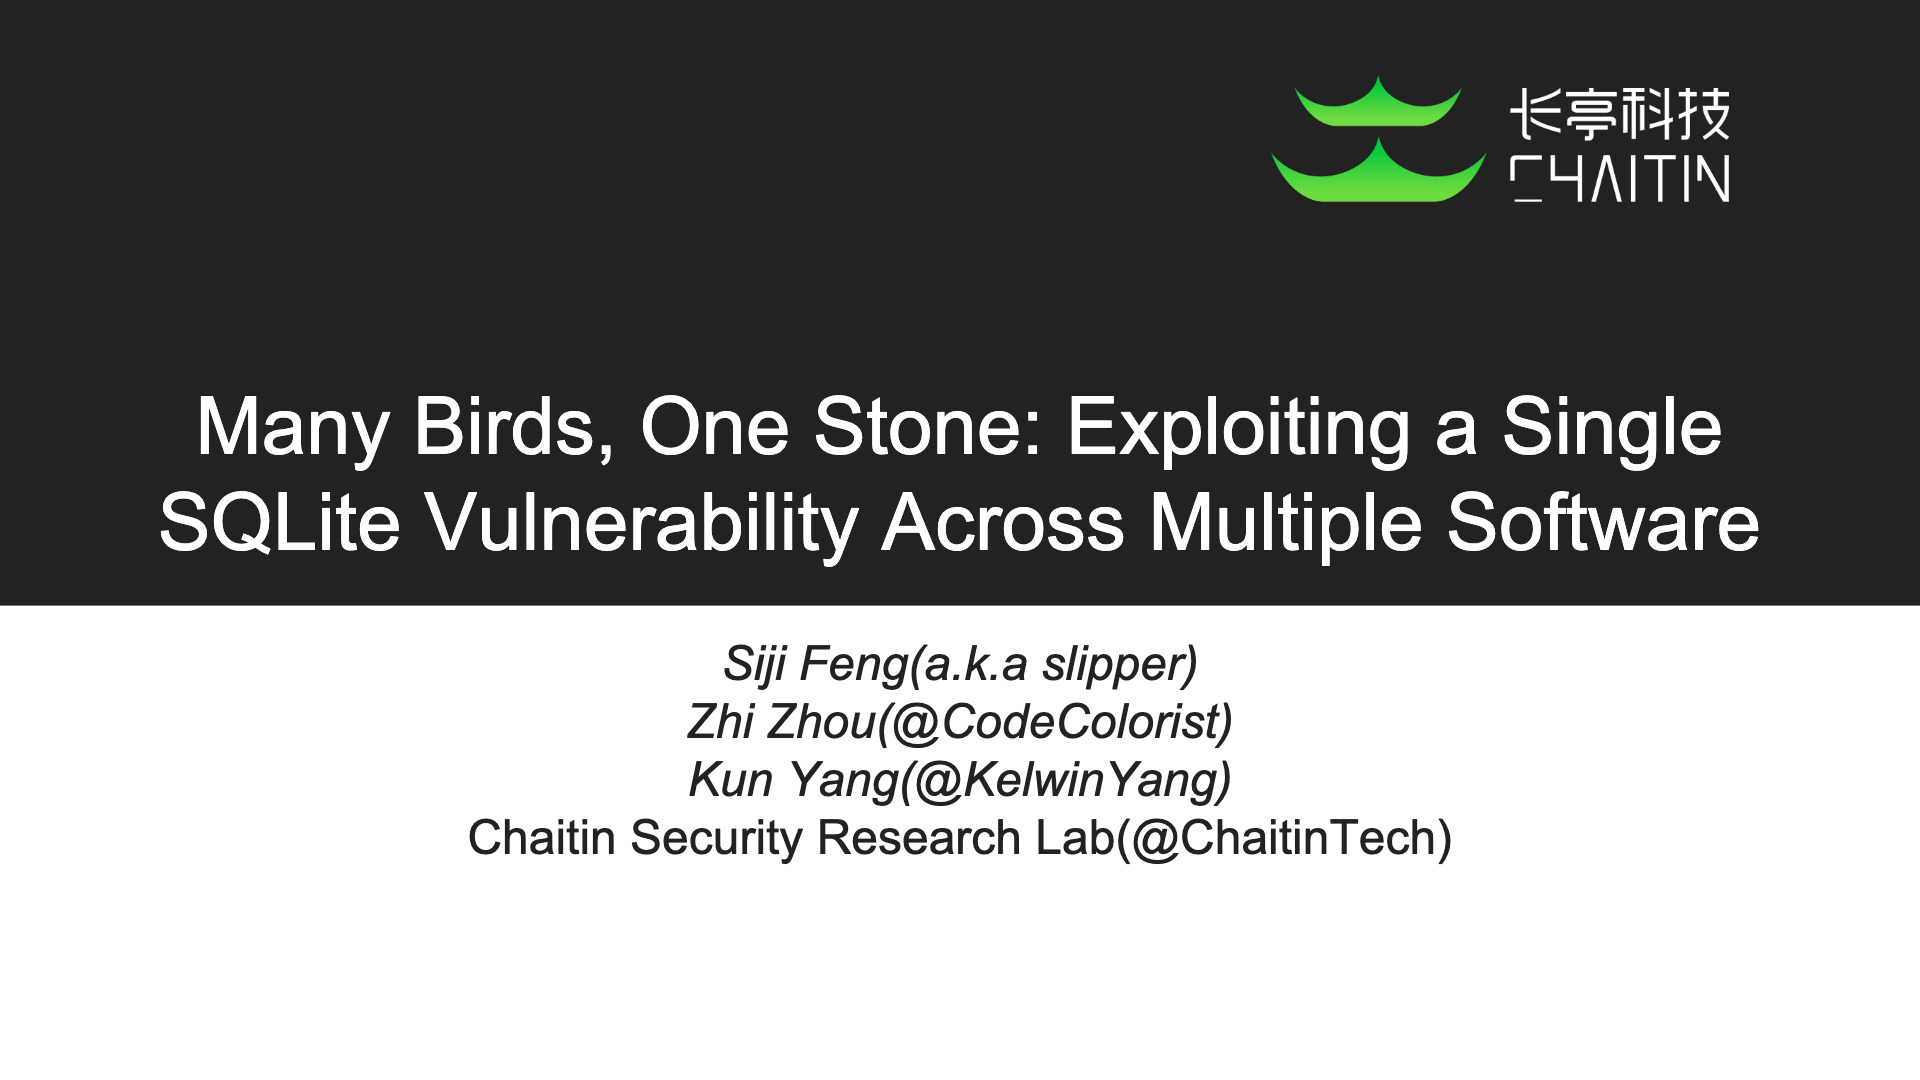 Many Birds, One Stone: Exploiting a Single SQLite Vulnerability Across Multiple Software (BlackHat USA 2017)